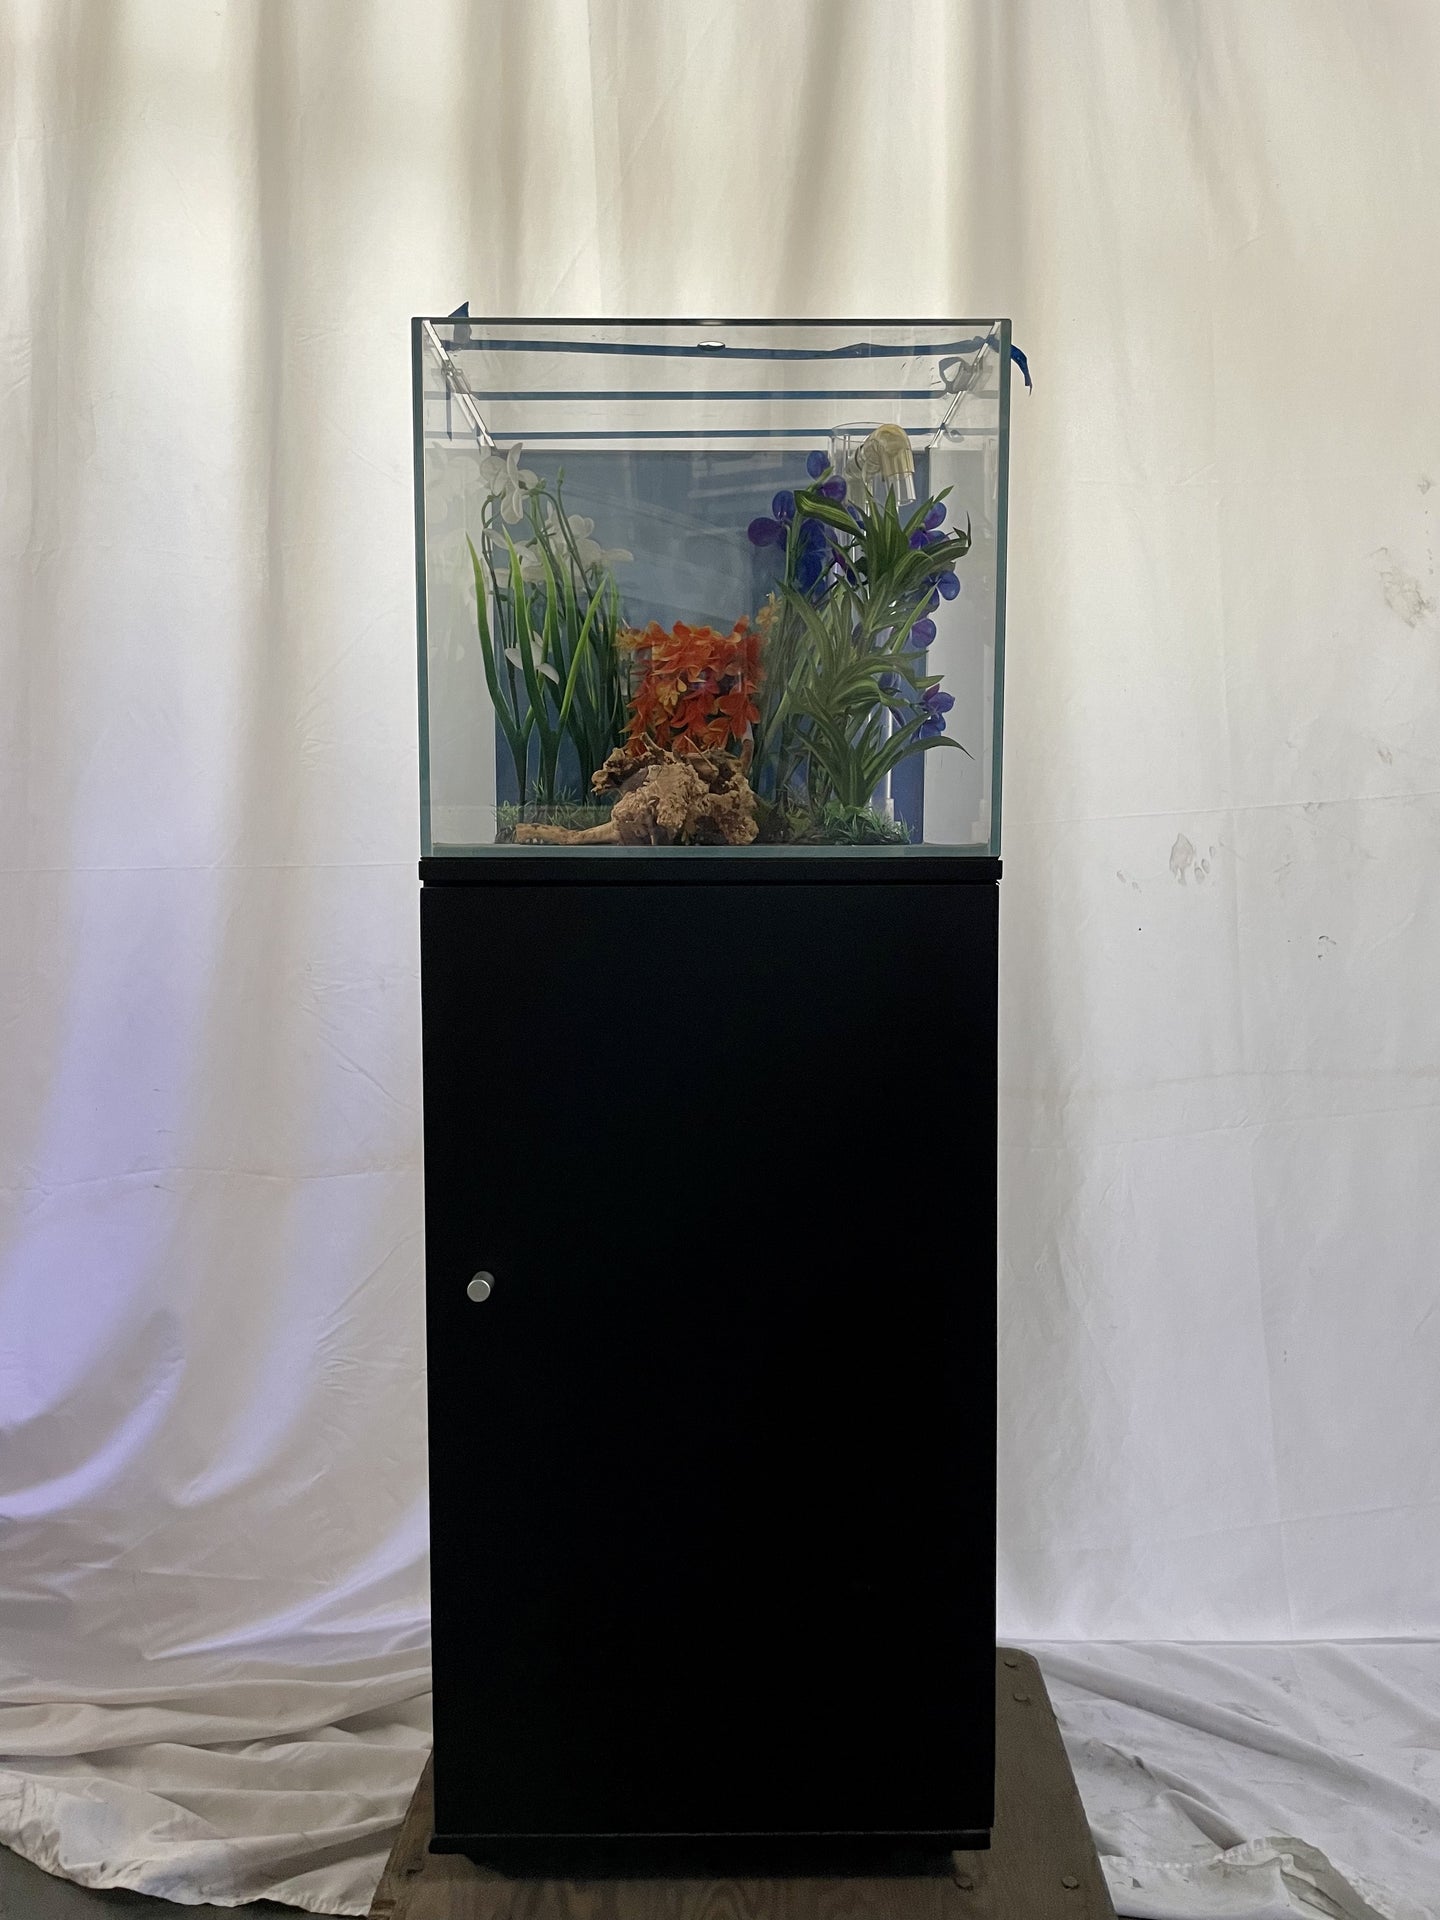 ULTRA CLEAR GLASS - 18 gallon cube fish tank aquarium full setup w/ filtration